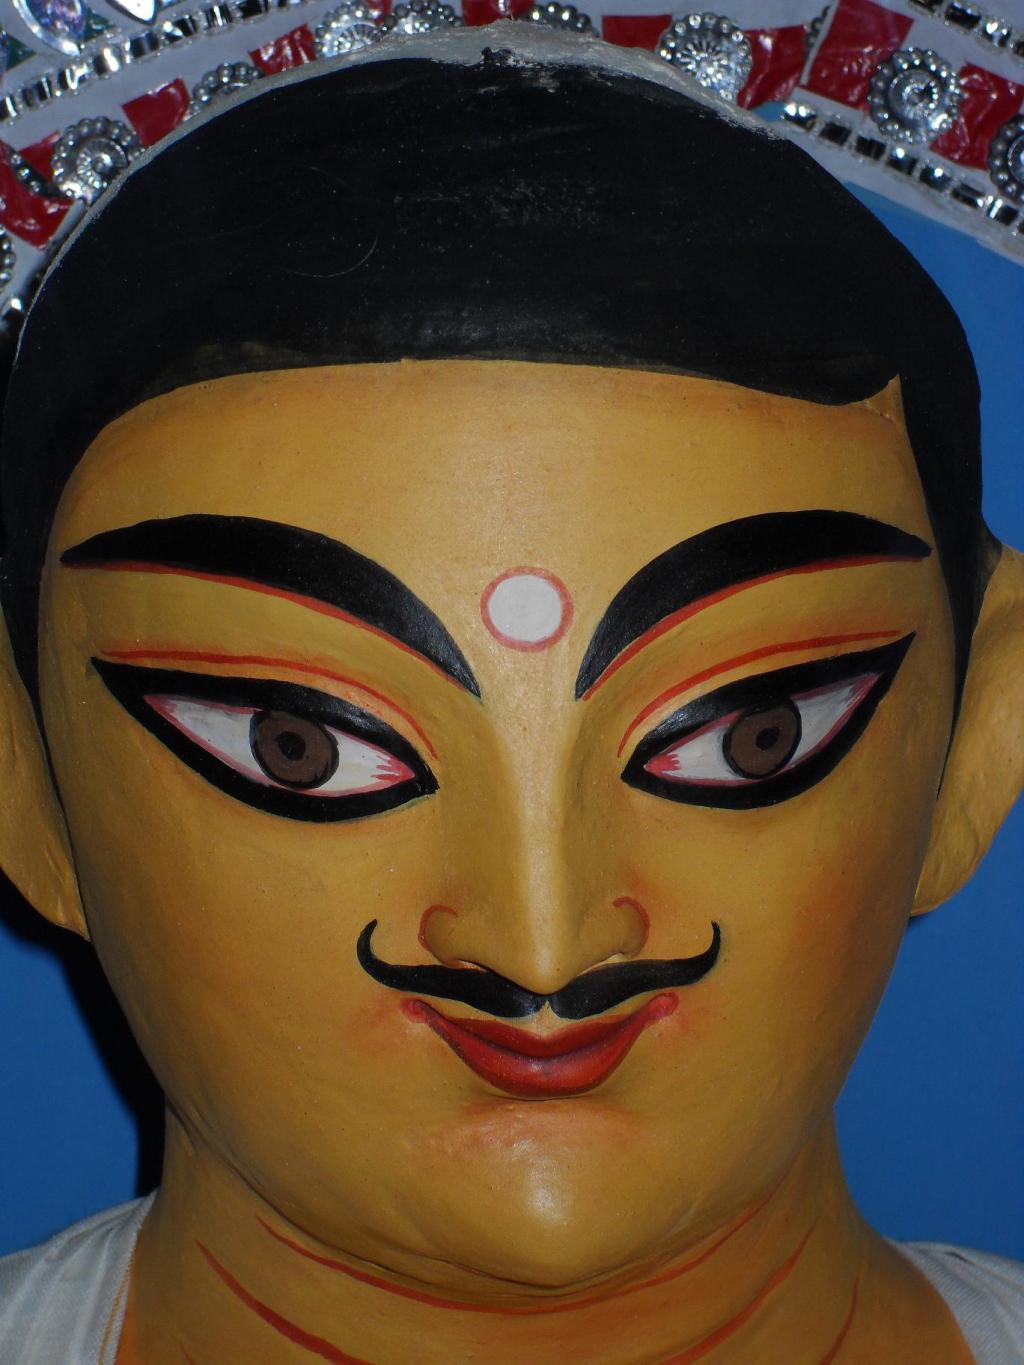 Kartikeya, the brave warrior and Ganesha's brother